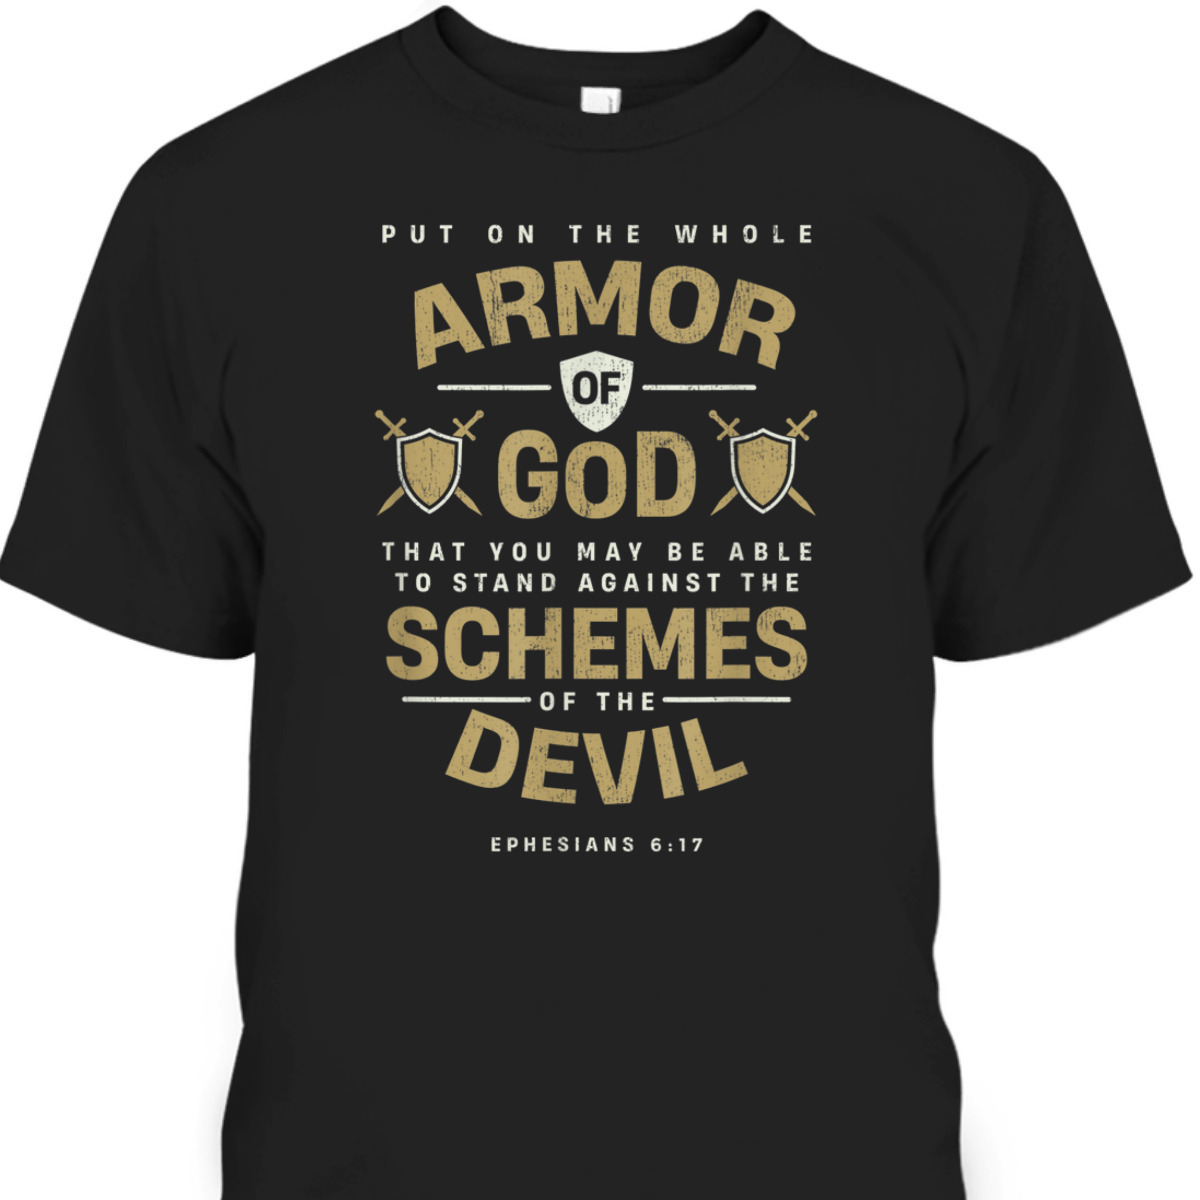 The Full Armor Of God Ephesians 617 T-Shirt Against The Schemes Of The Devil